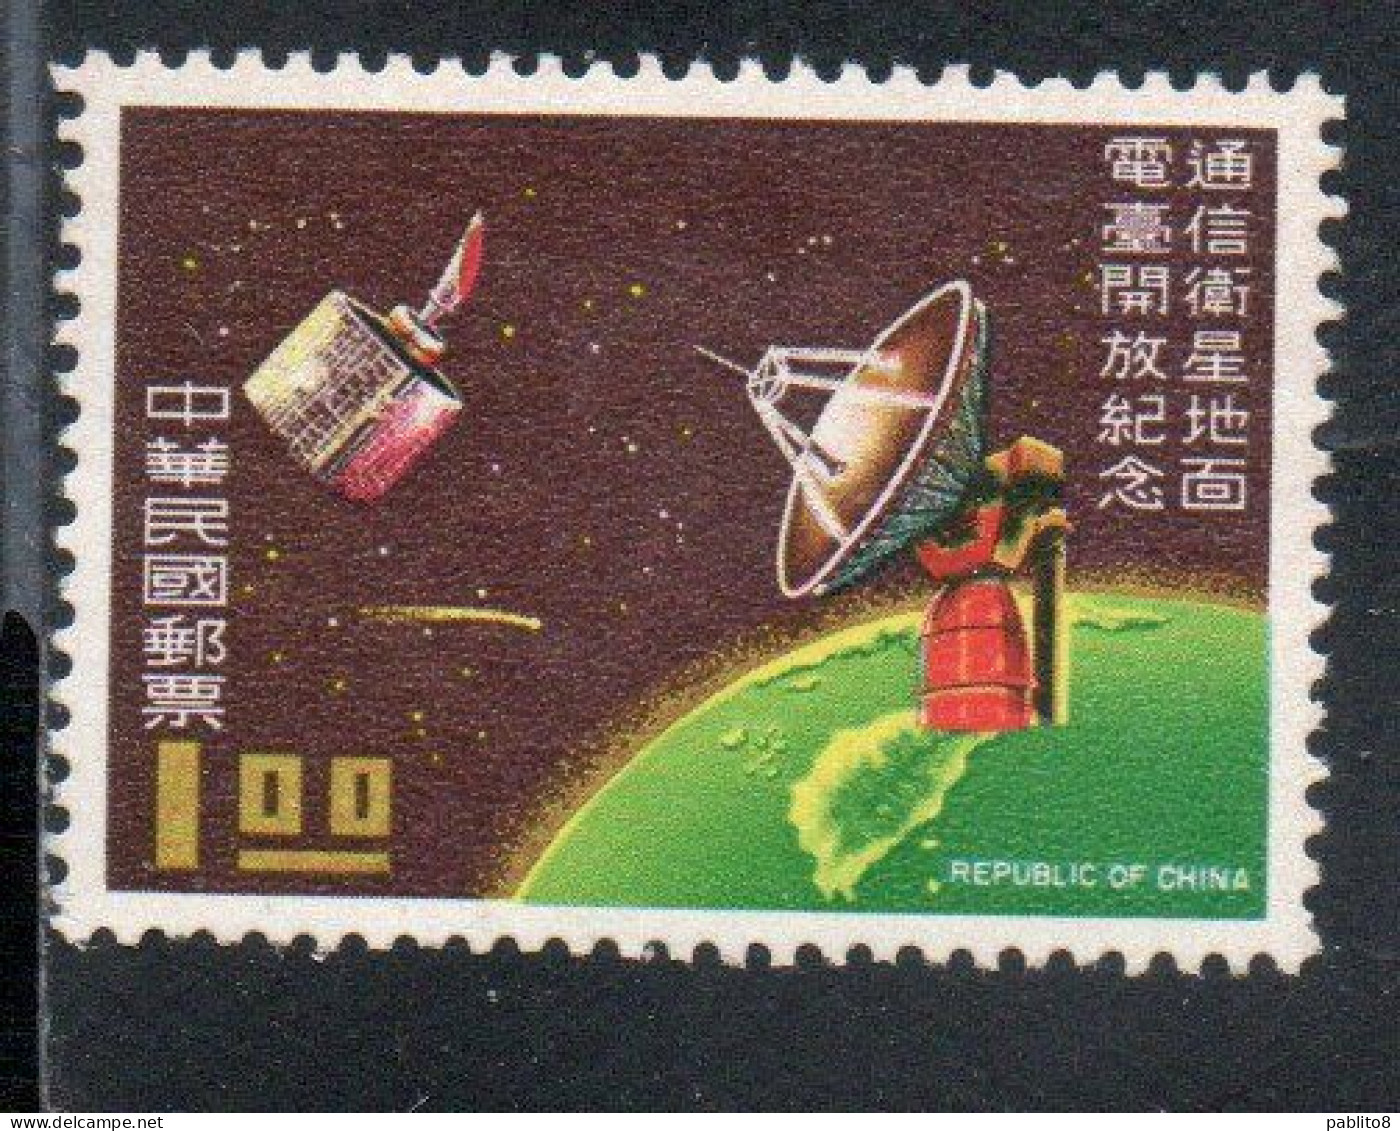 CHINA REPUBLIC CINA TAIWAN FORMOSA 1969 SPACE COMMUNICATION SATELLITE EARTH STATION AT CHIN-SHAN-LI 1$ MNH - Ongebruikt